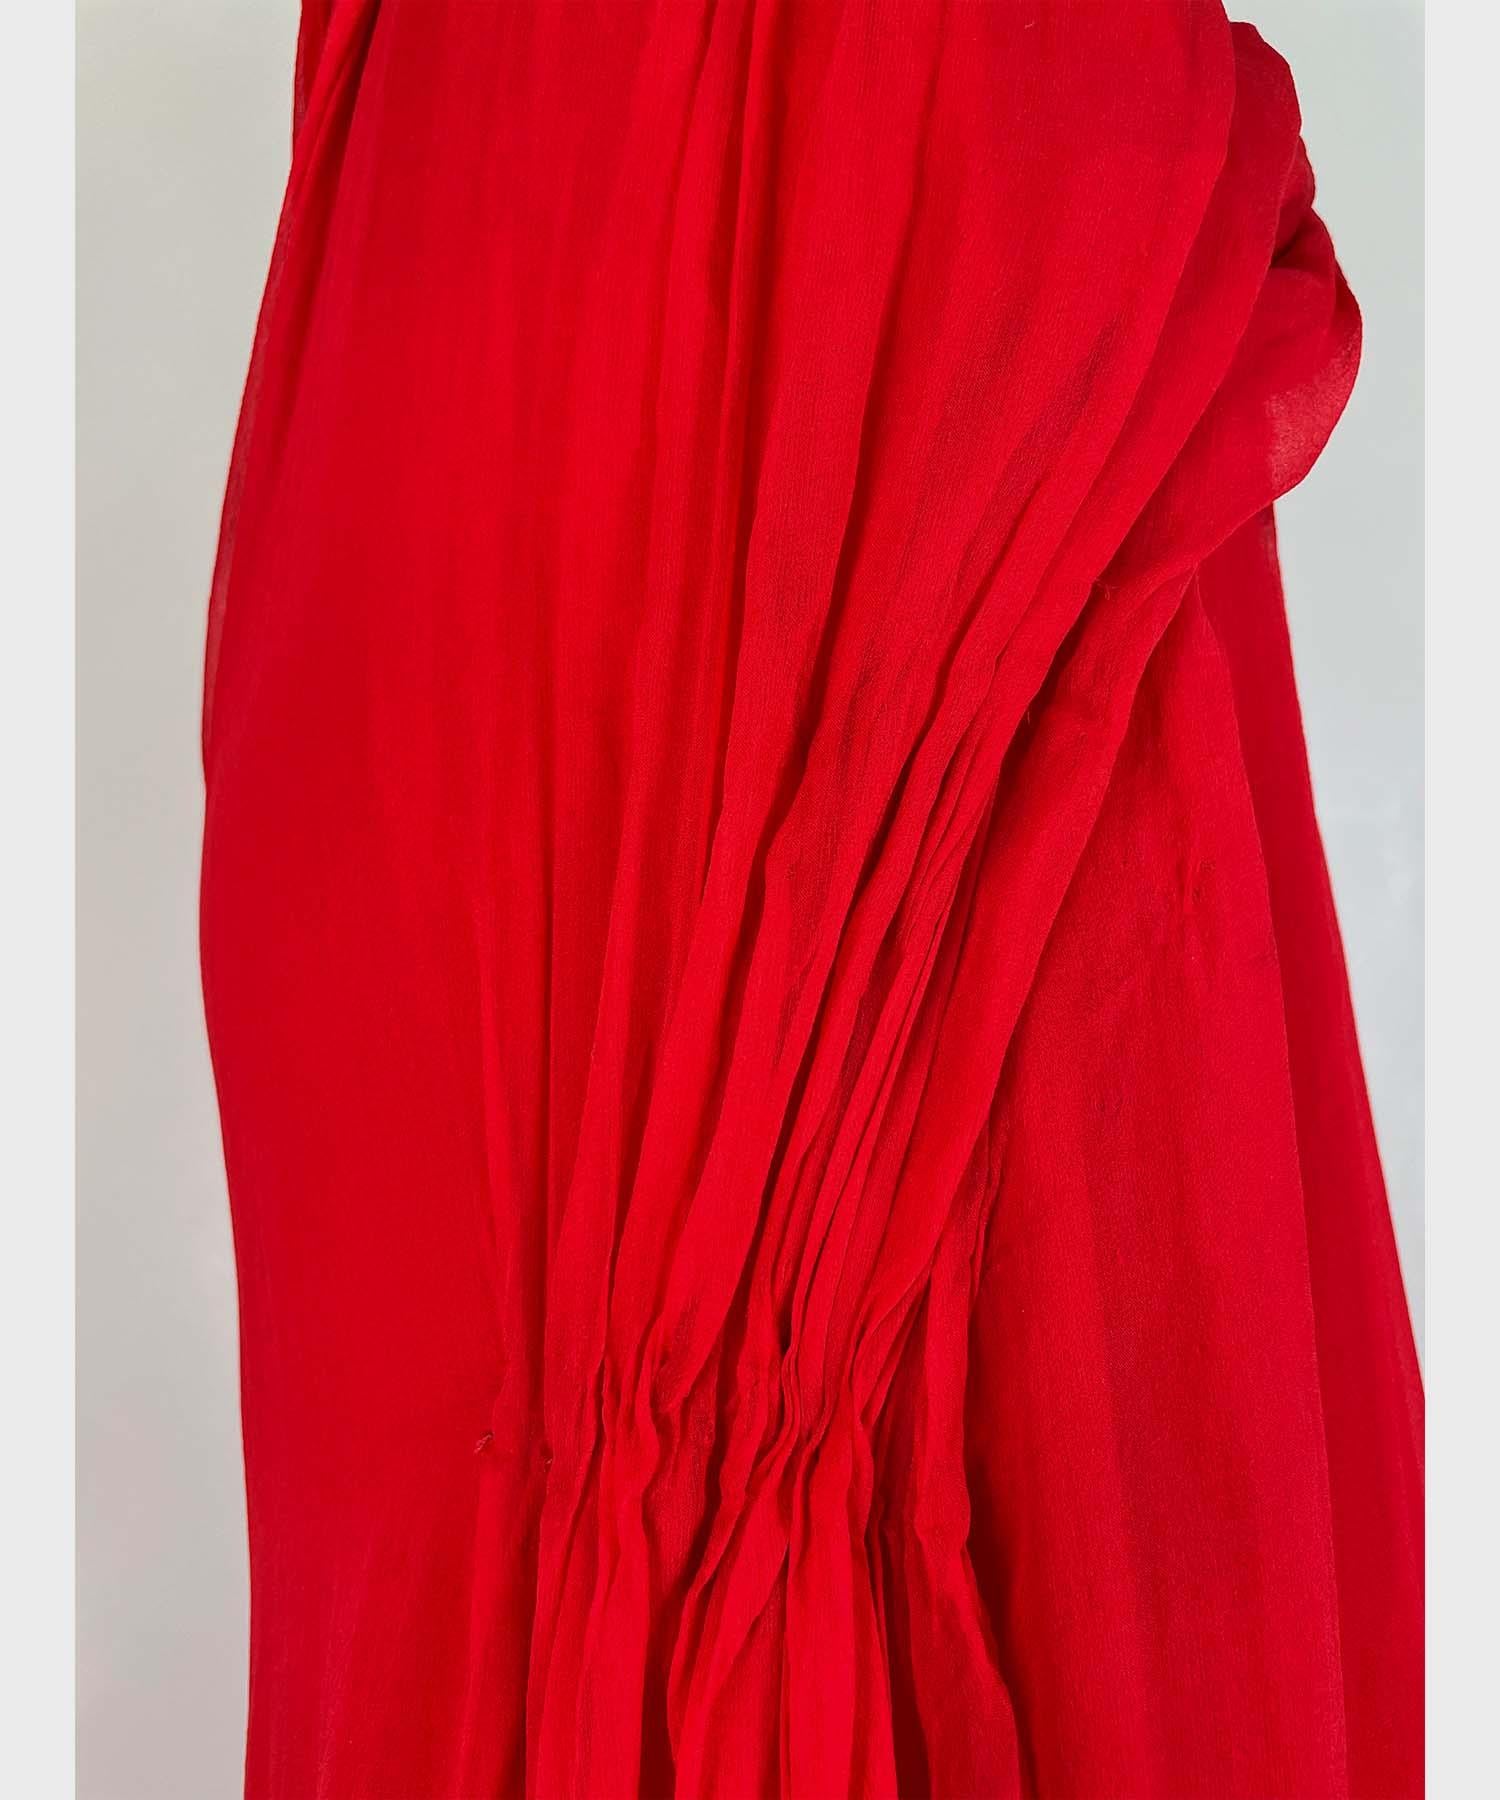 Atelier Versace Red Silk Chiffon Gown Patron Original For Sale 7